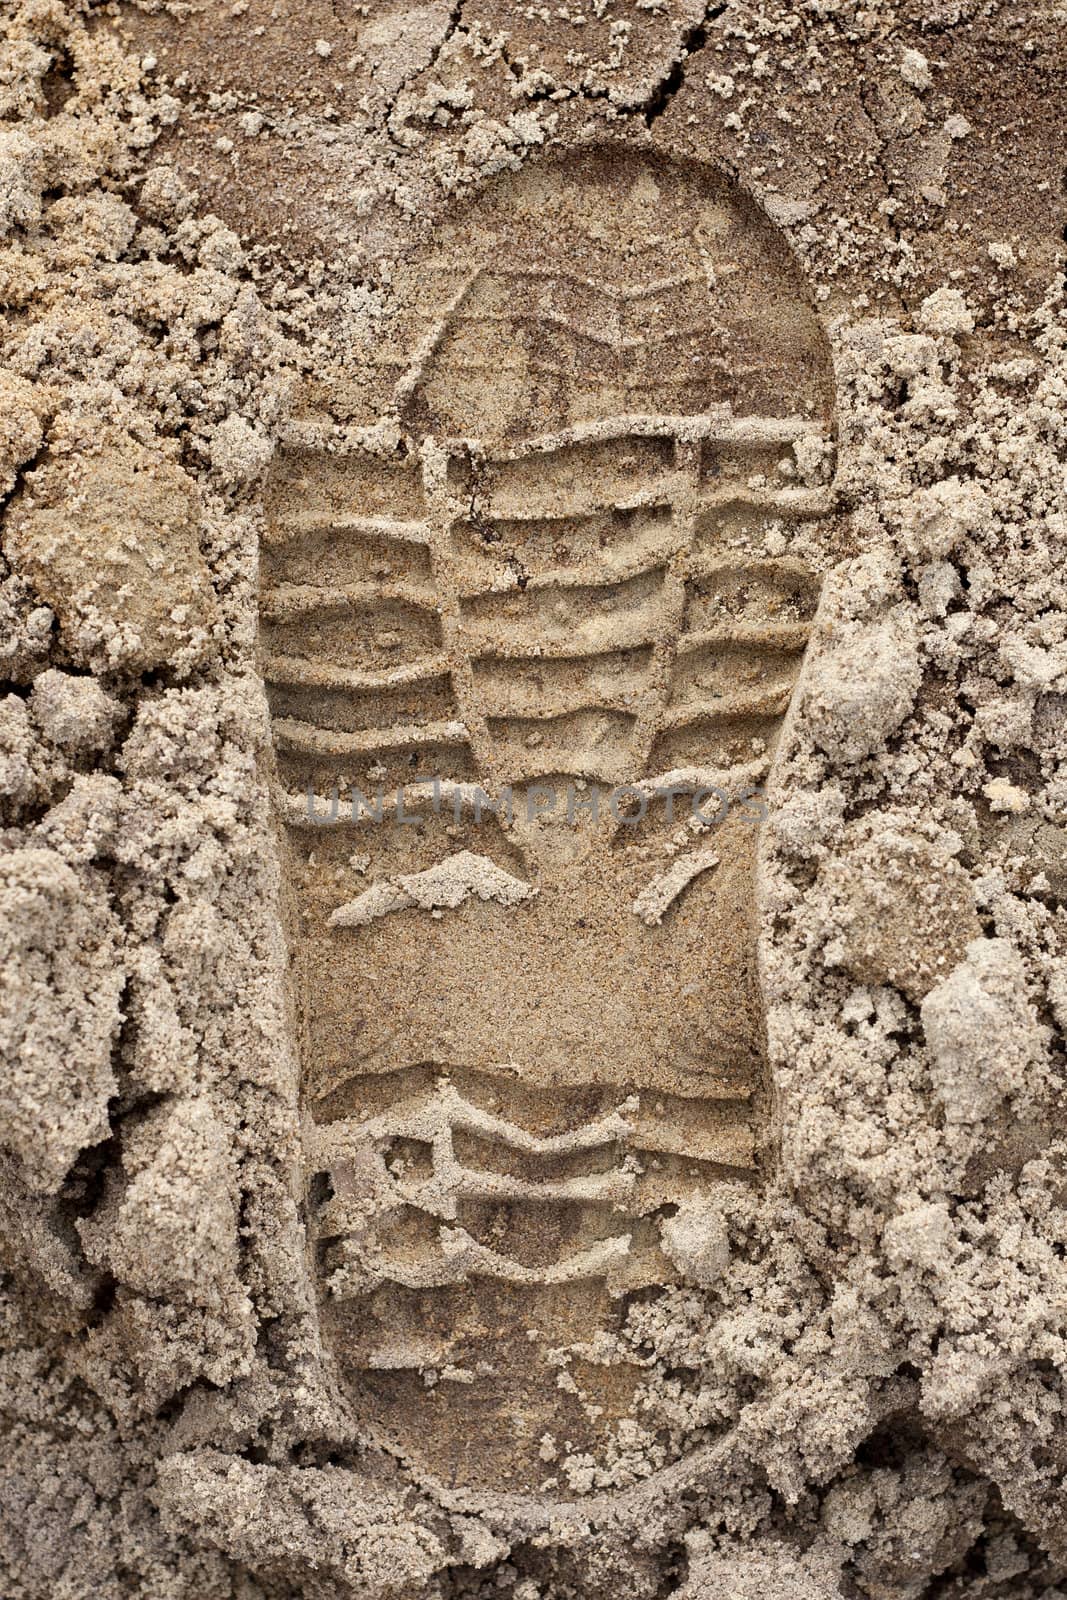 Footprint shoe on sand